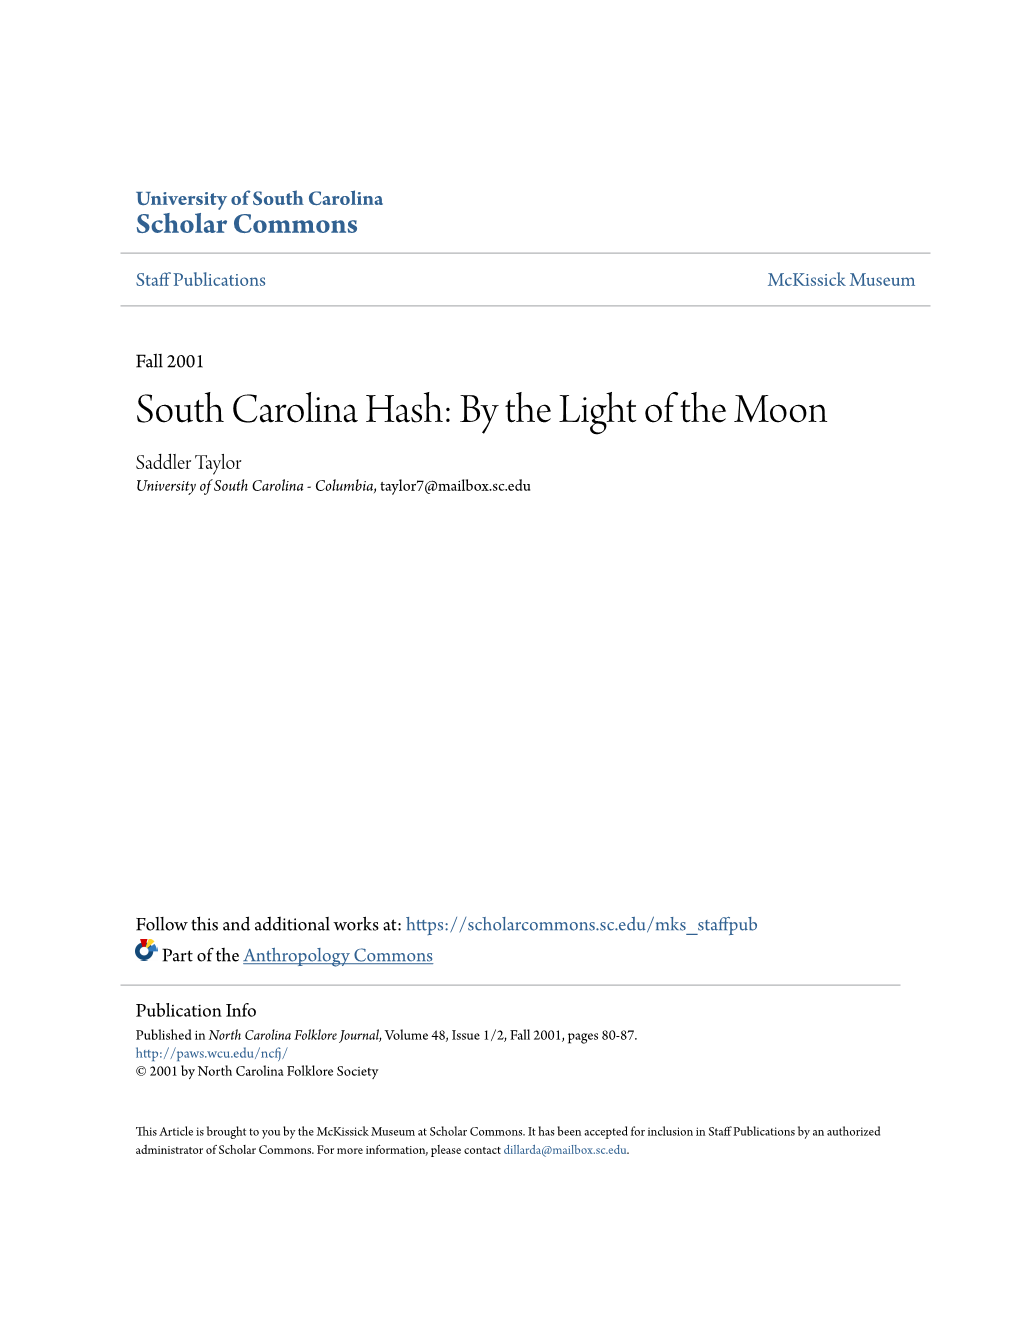 South Carolina Hash: by the Light of the Moon Saddler Taylor University of South Carolina - Columbia, Taylor7@Mailbox.Sc.Edu